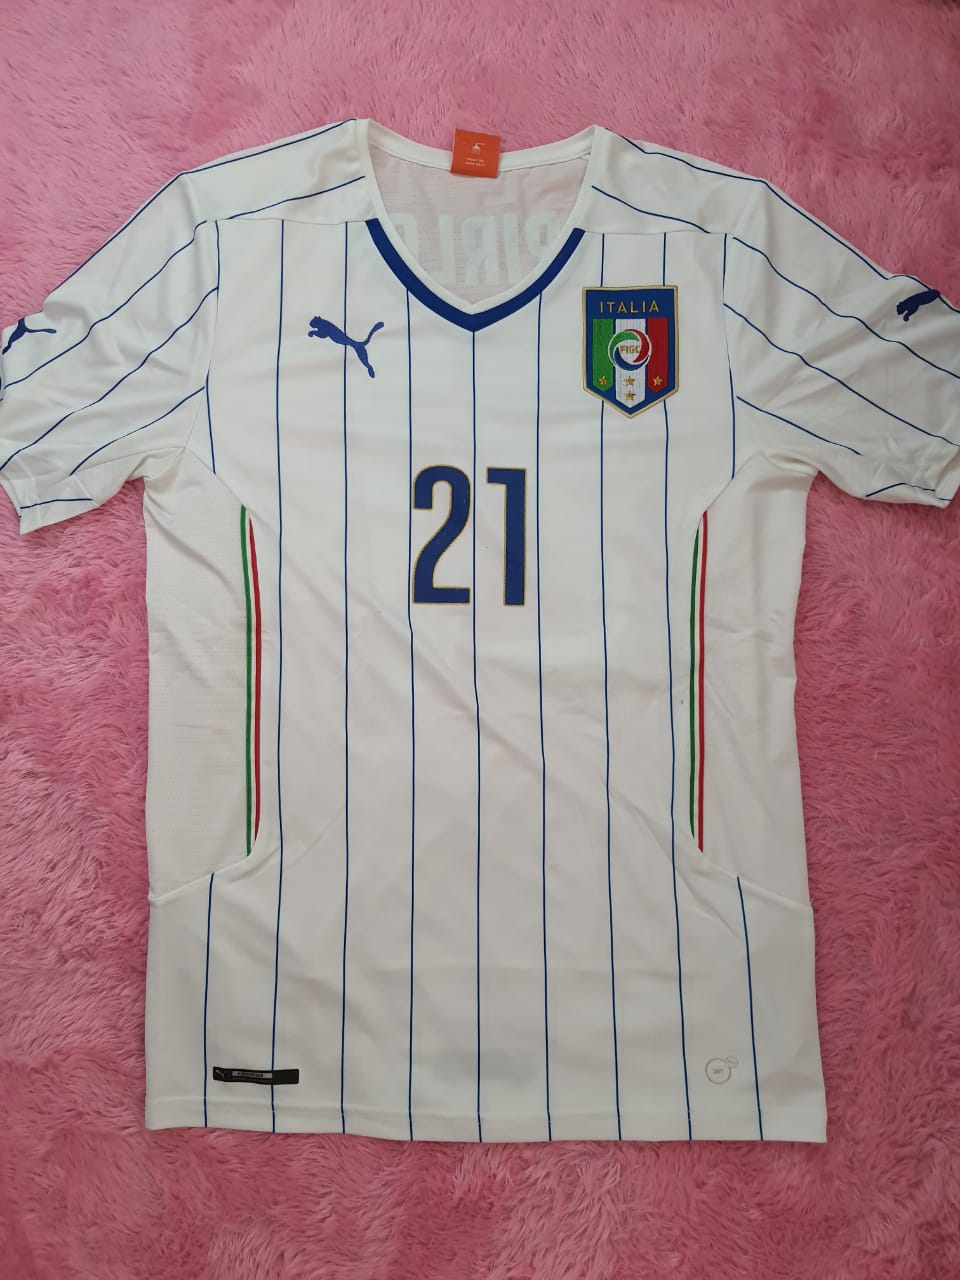 Jersey Puma Italy World Cup 2014 Away - Andrea Pirlo (Original)